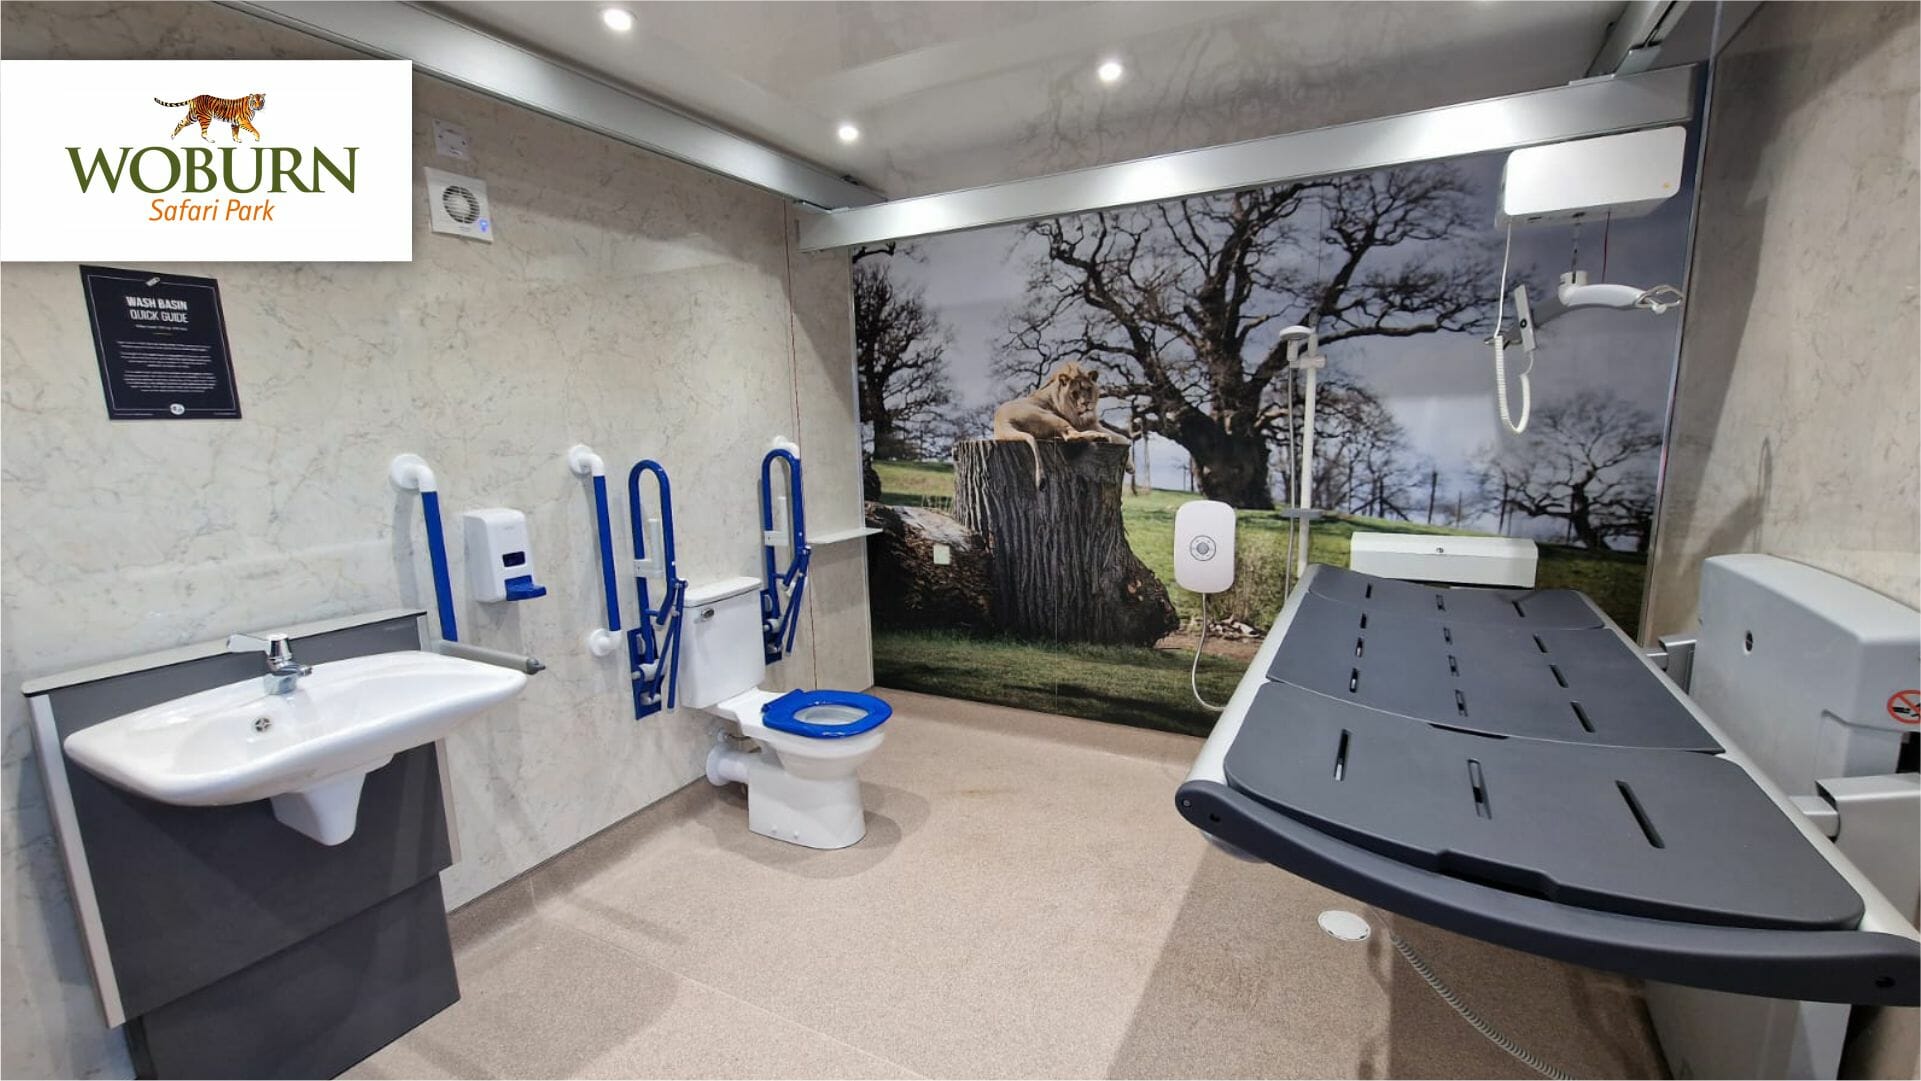 New modular Changing Places toilet at Woburn Safari Park